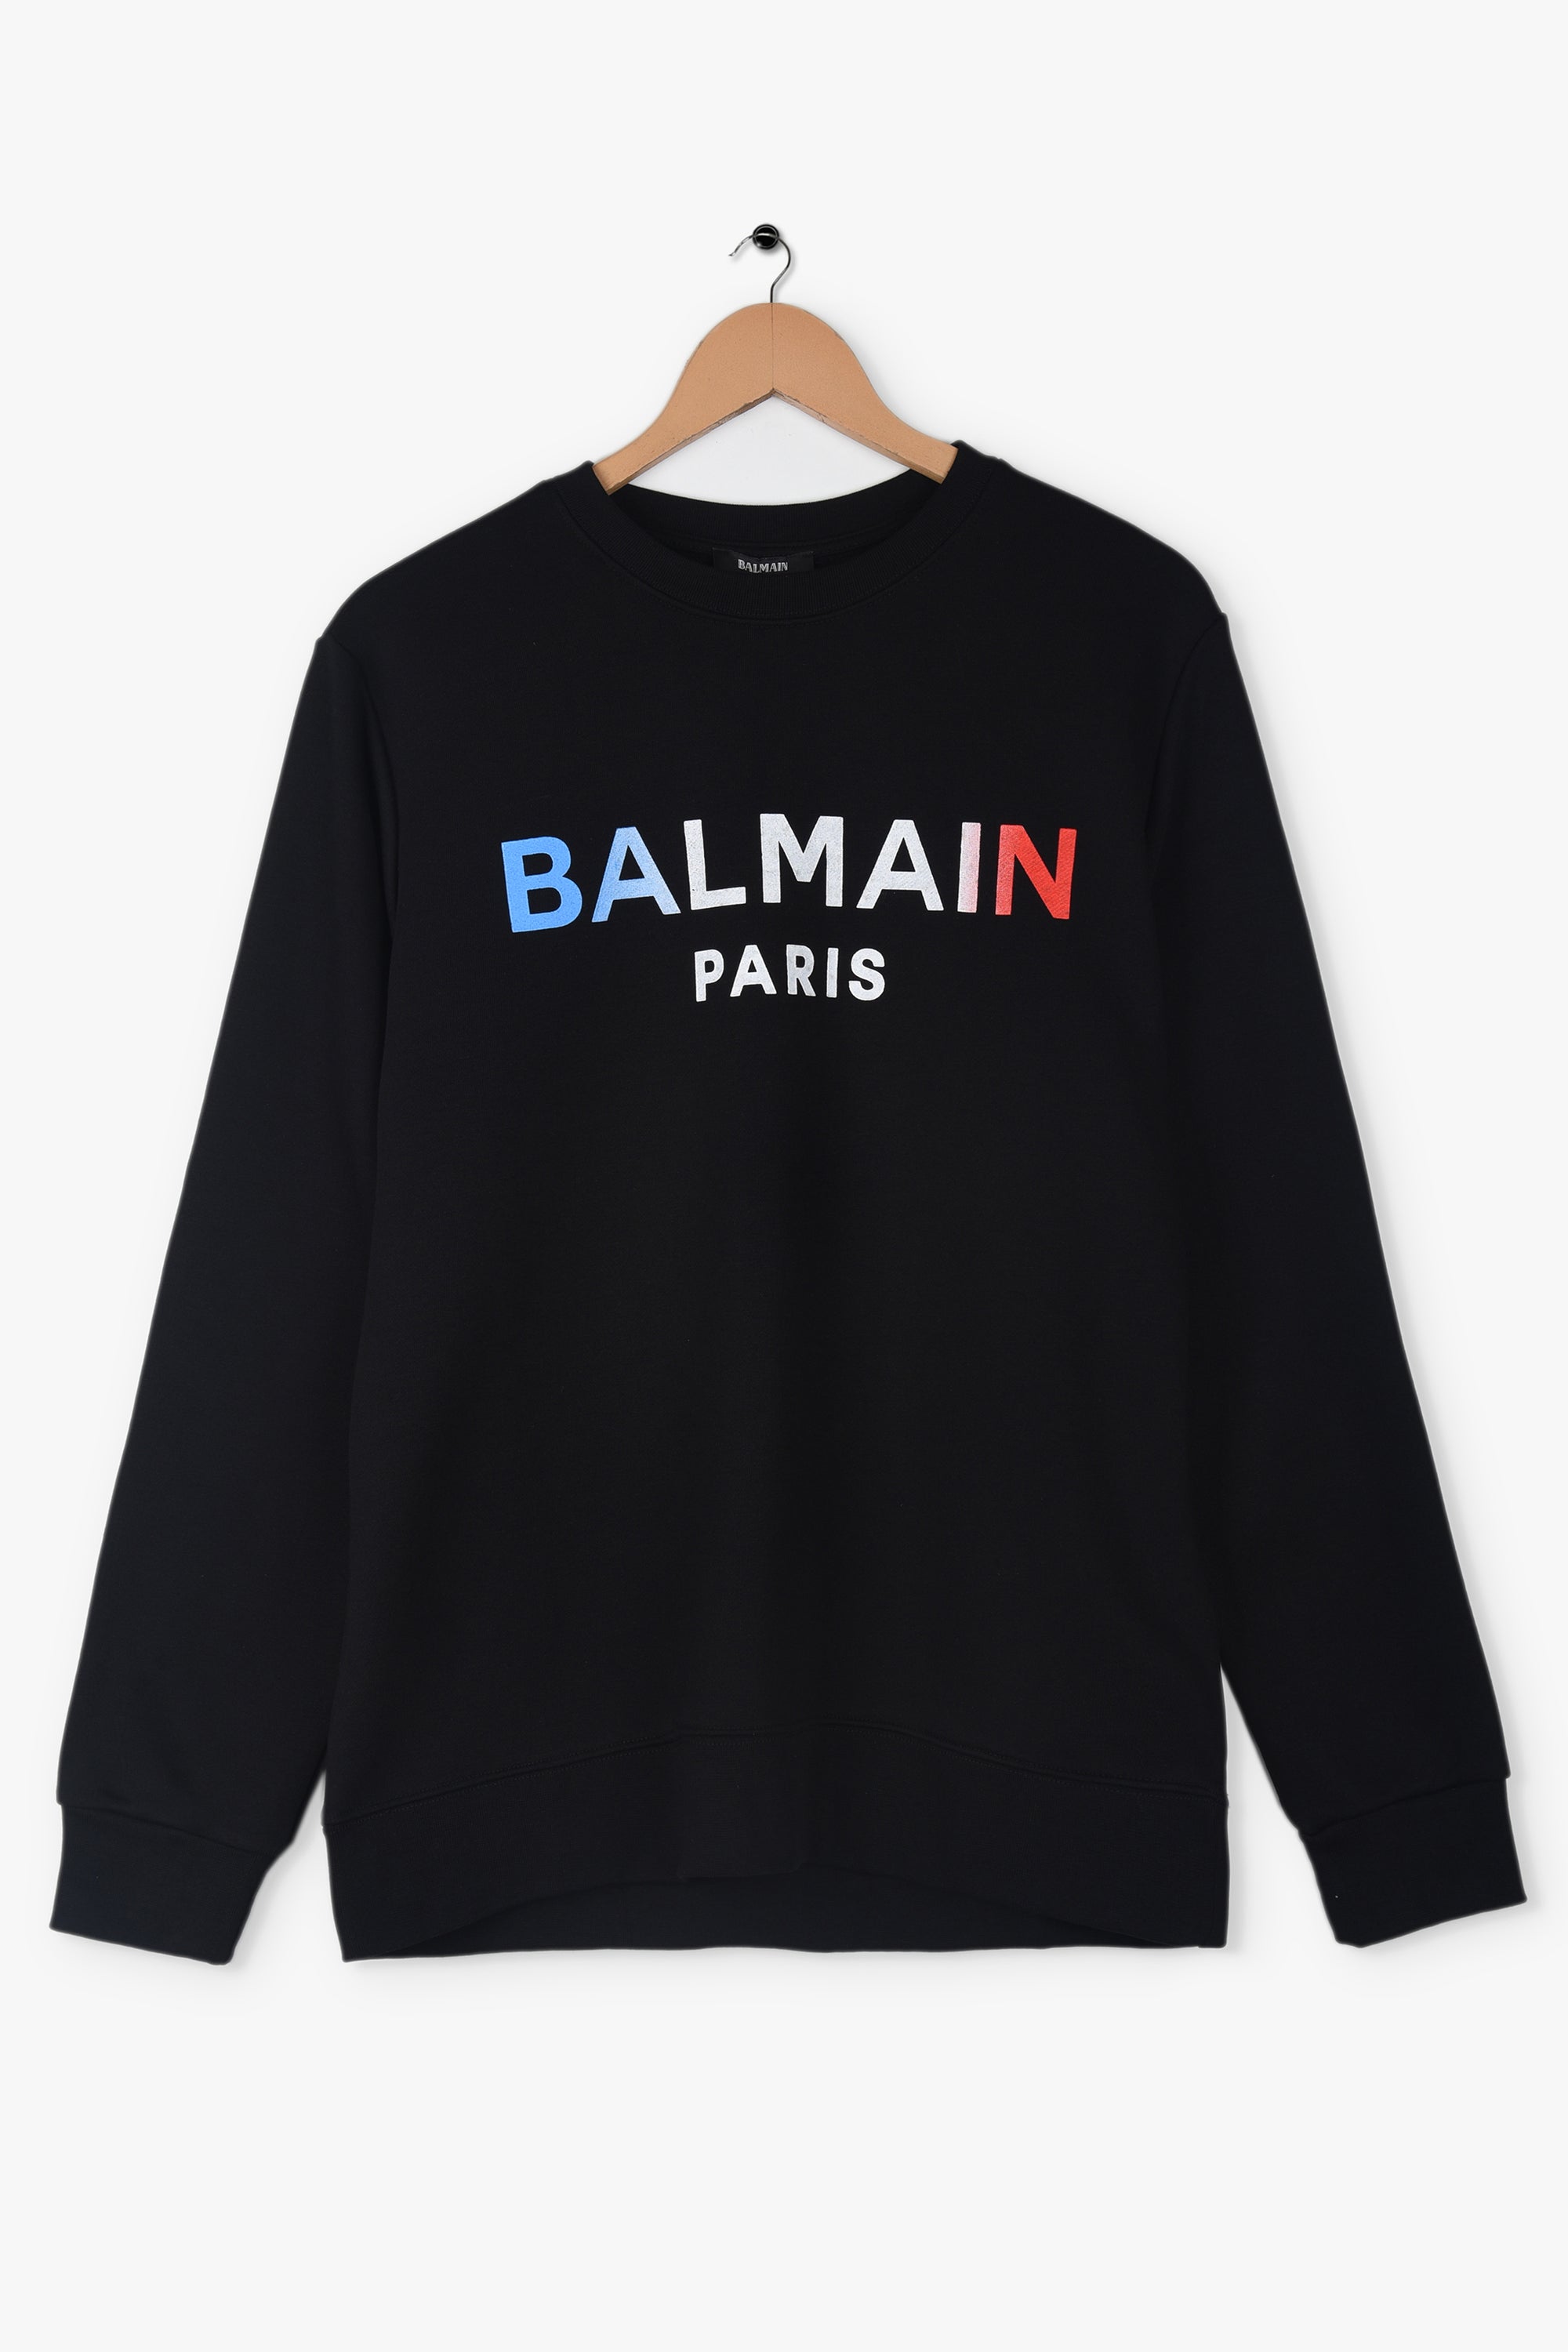 Balmain Paris Printed Logo Sweatshirt